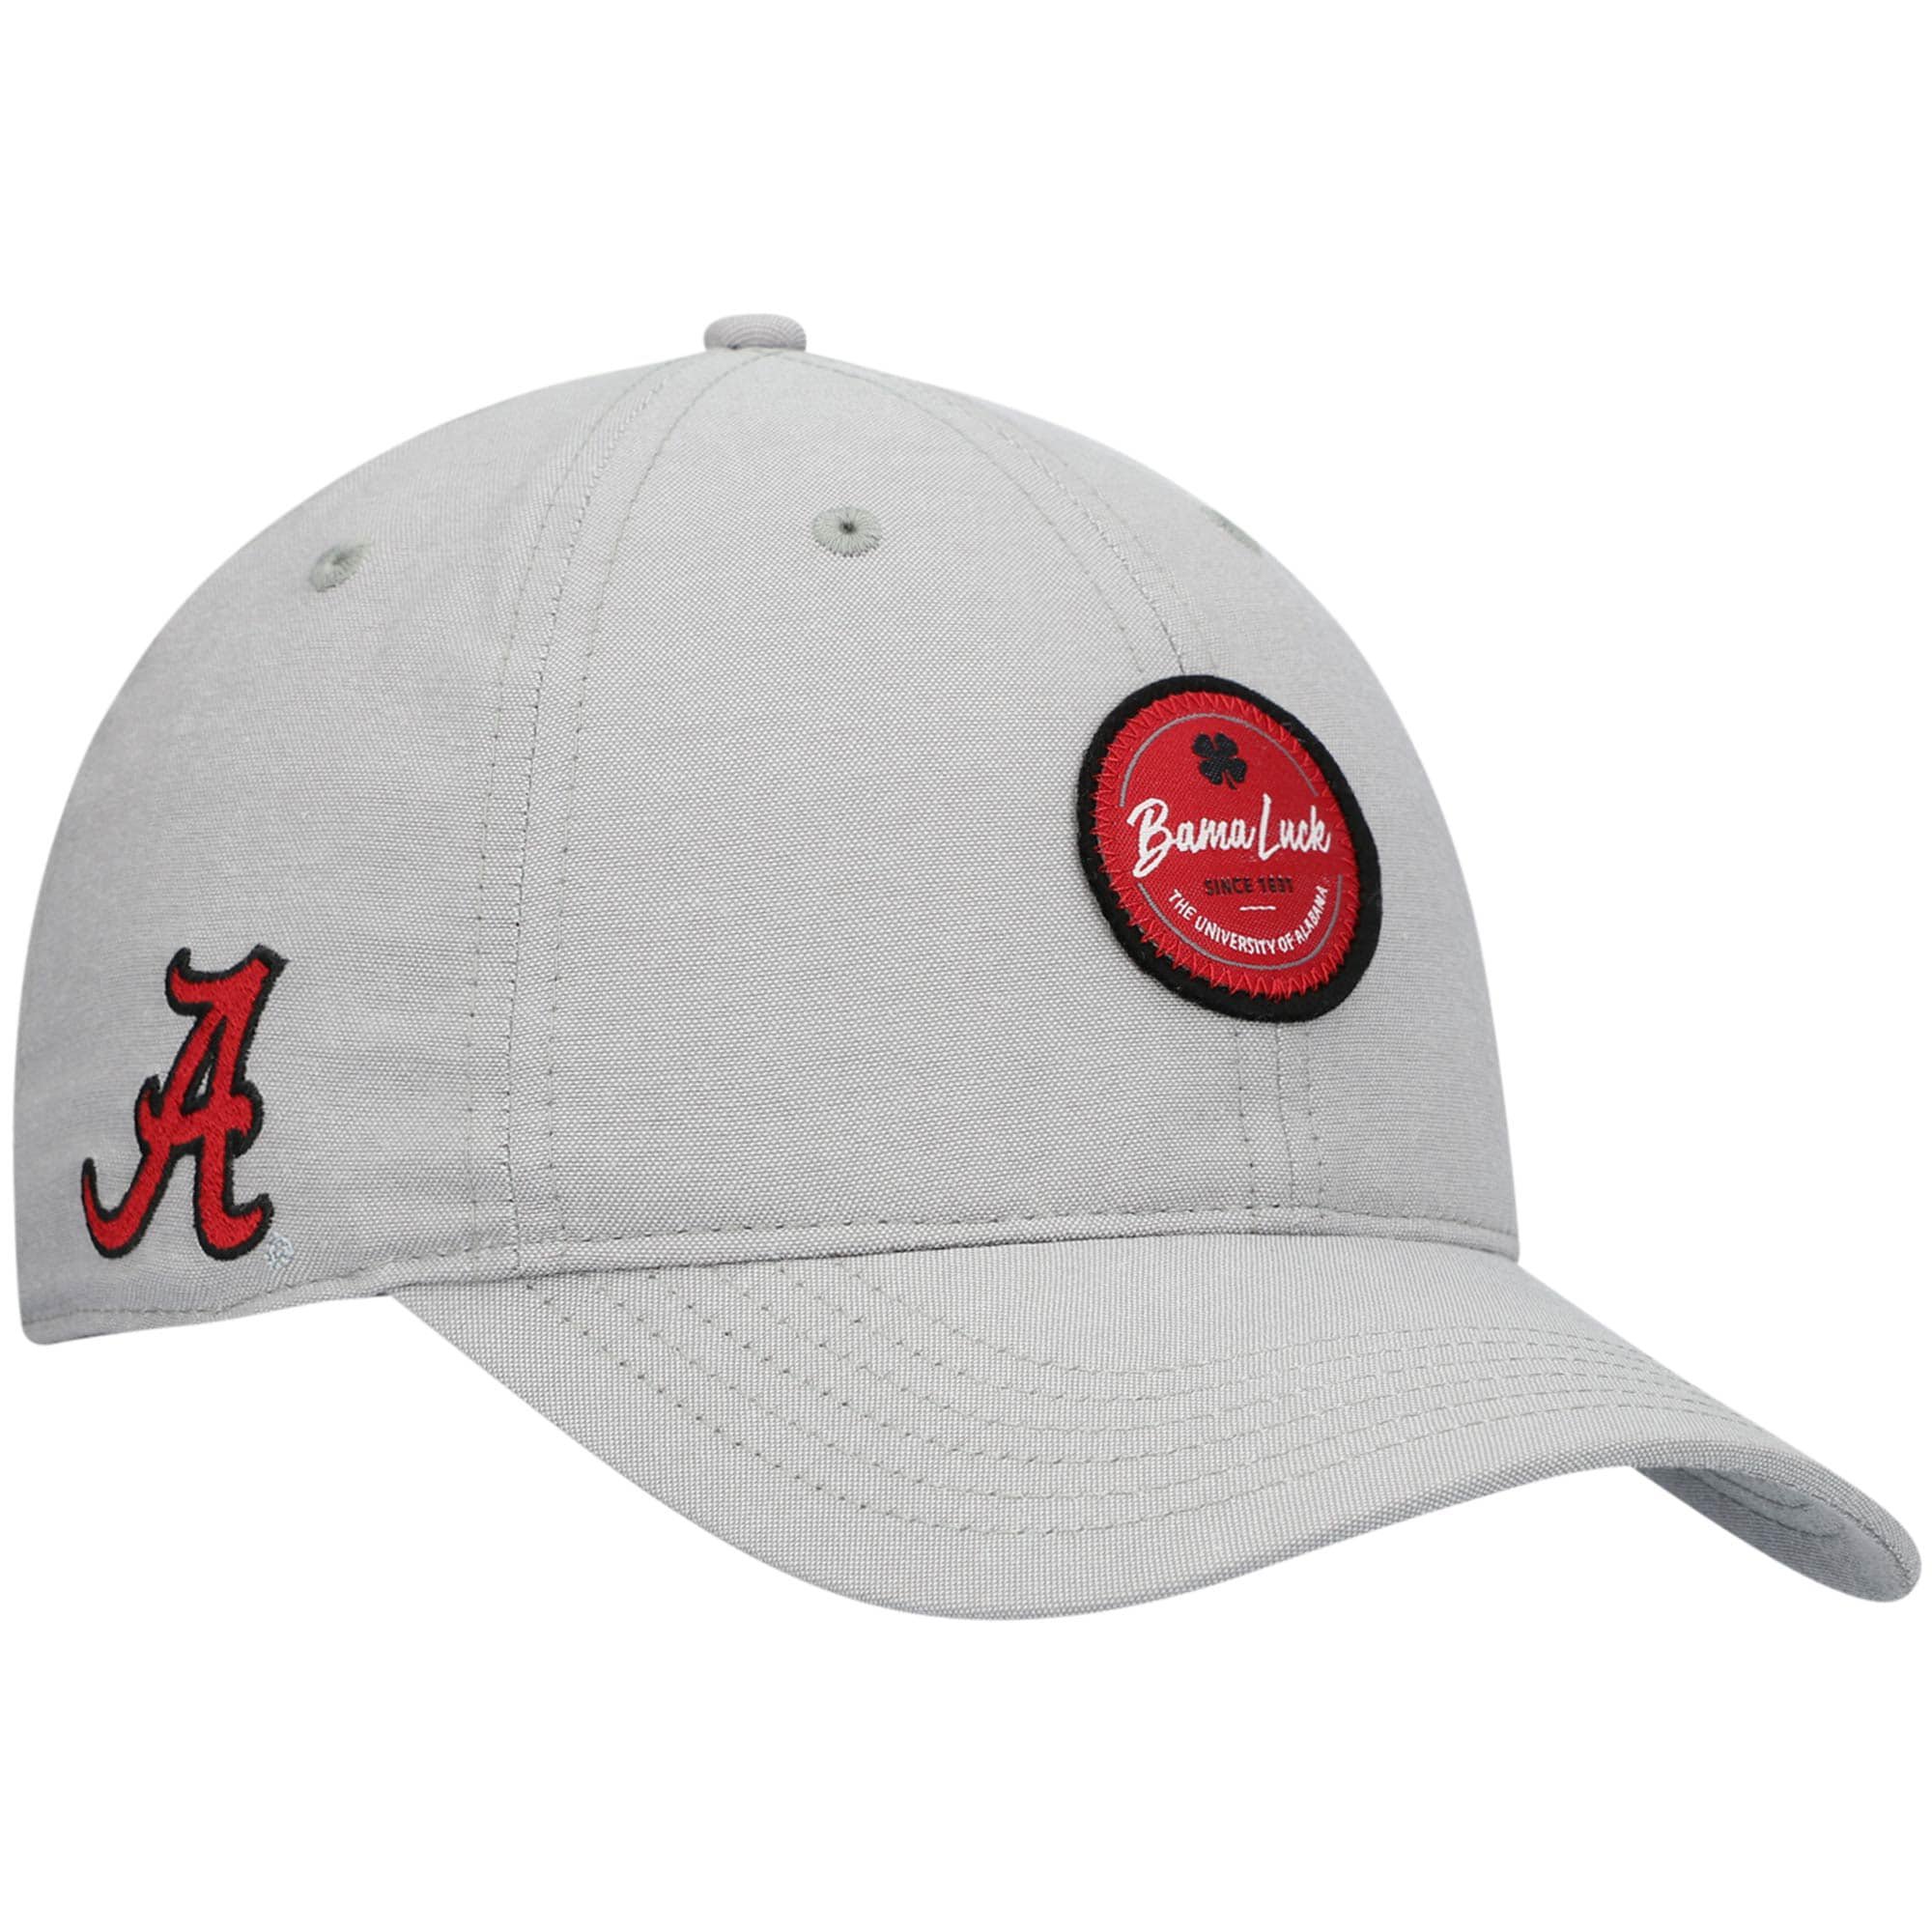 University of South Alabama Hats, University of South Alabama Caps